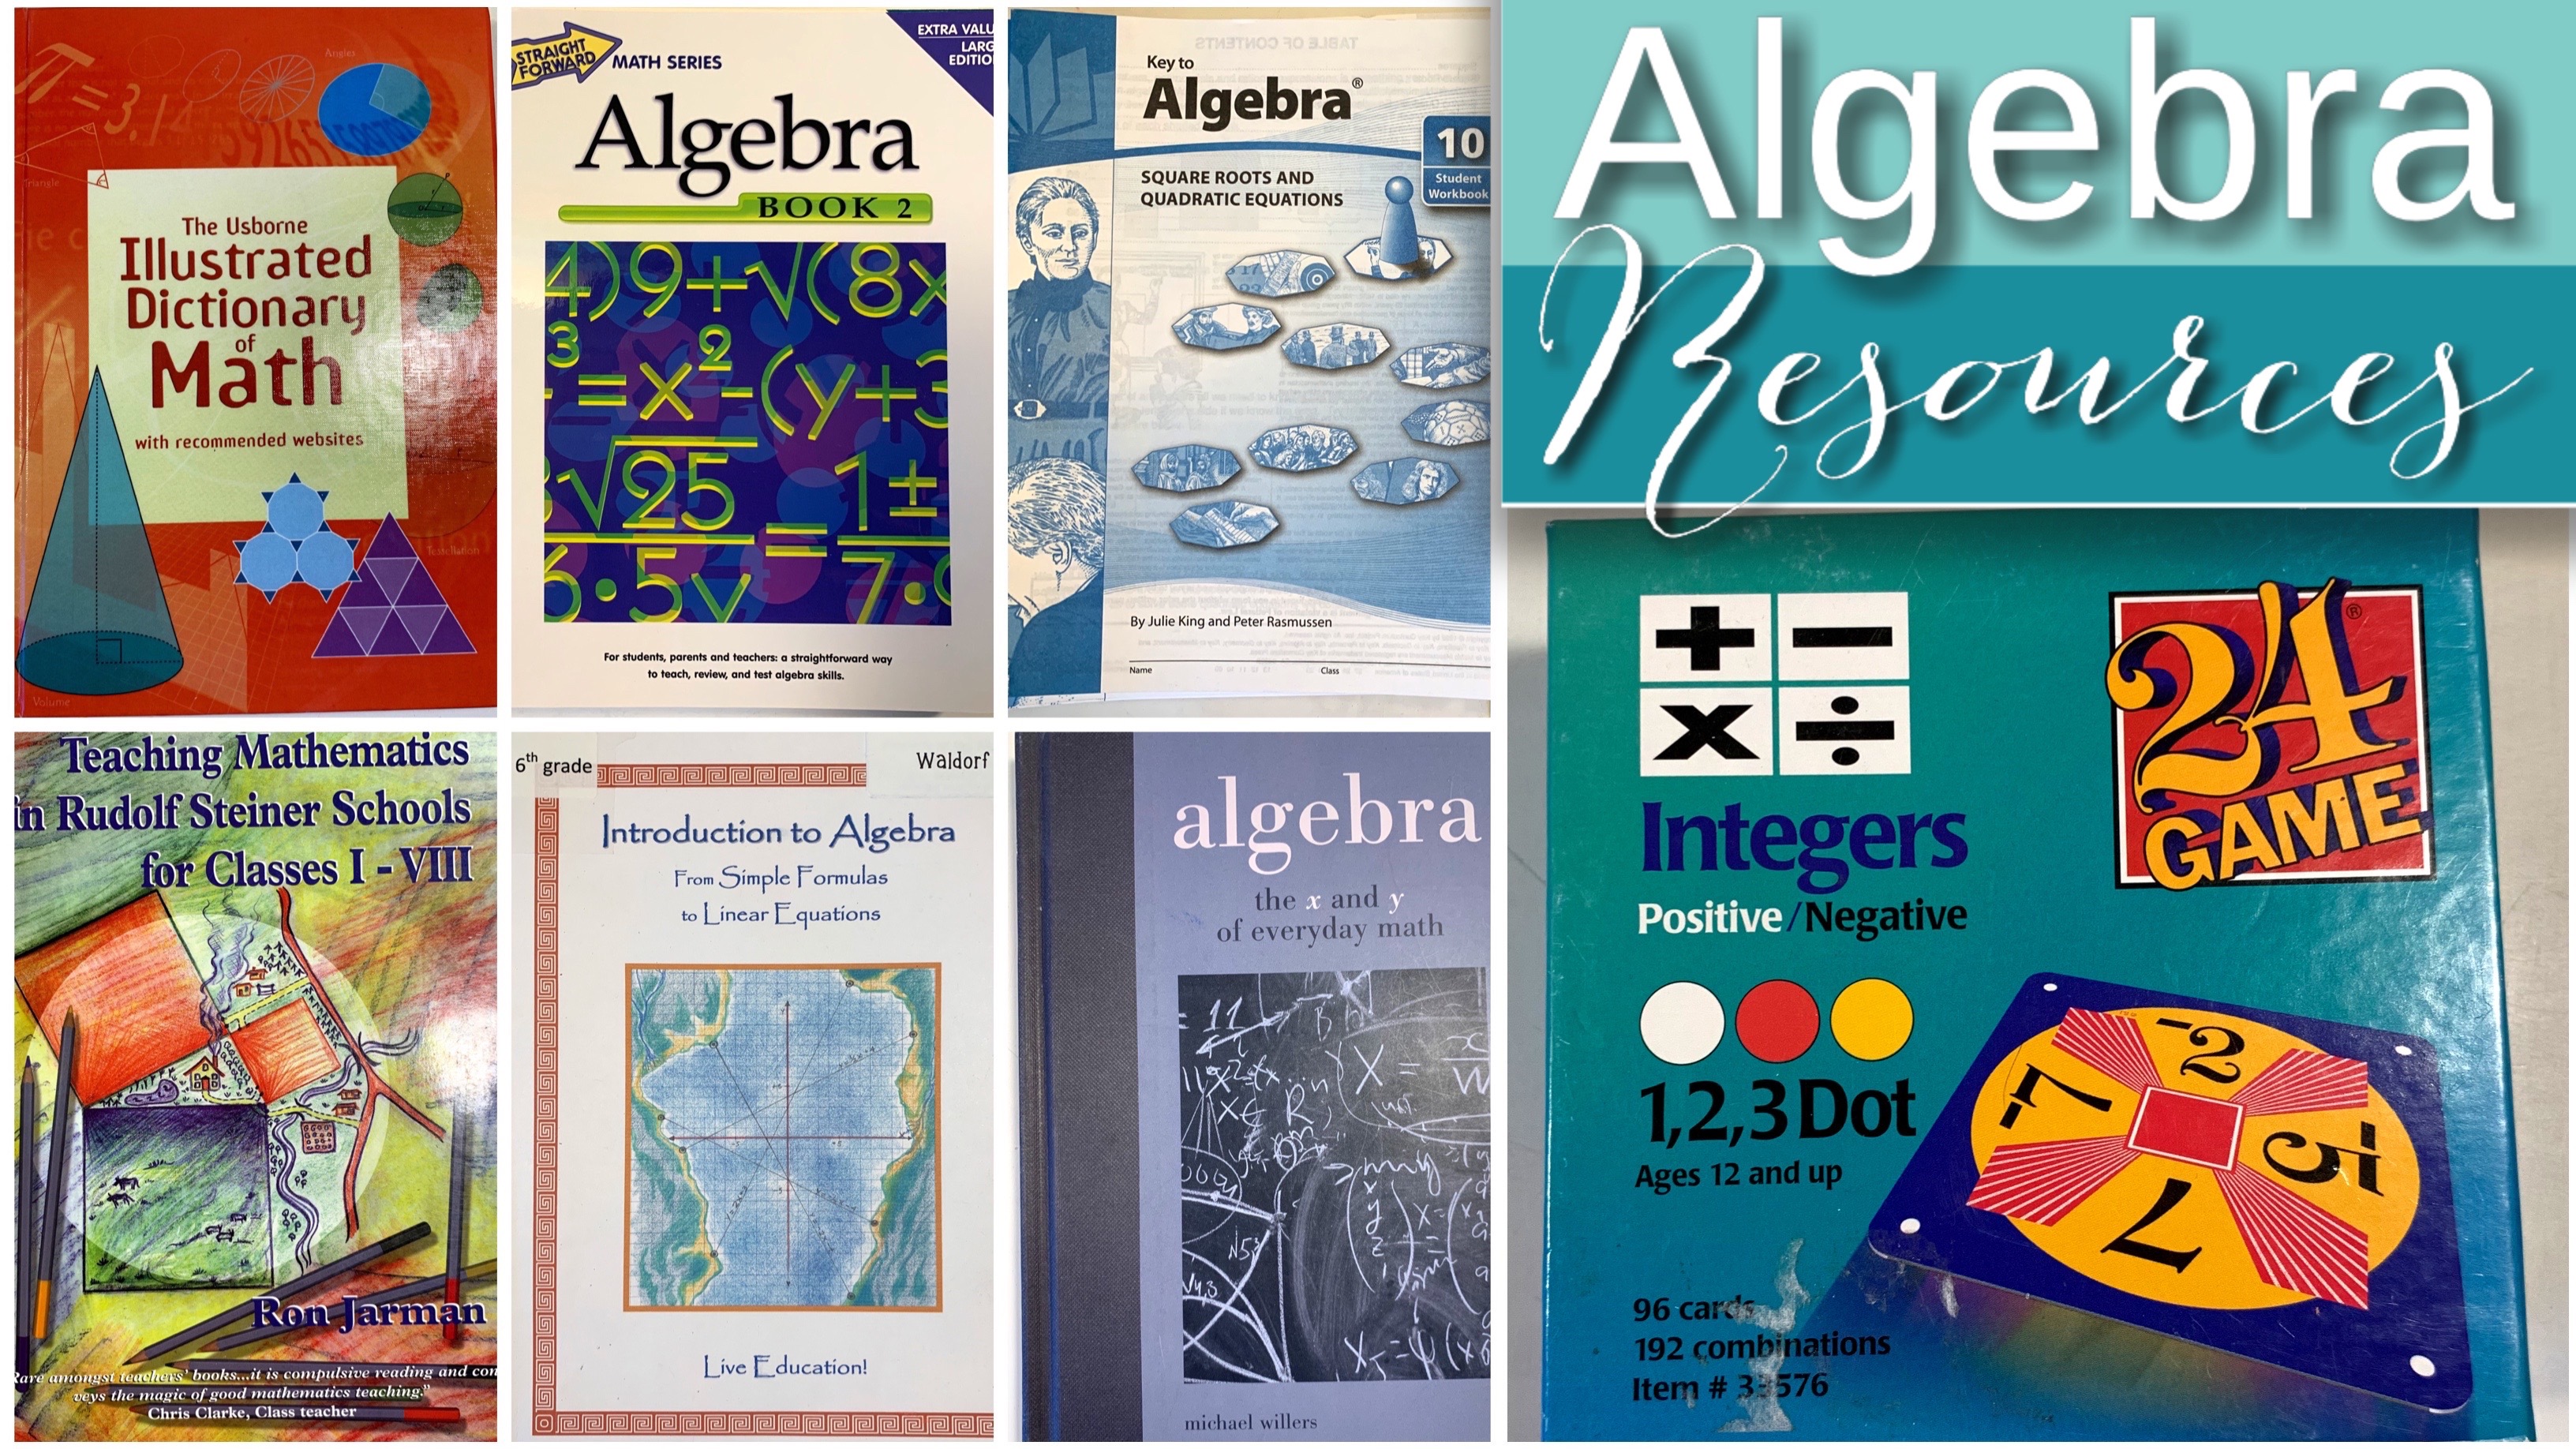 Algebra Resources